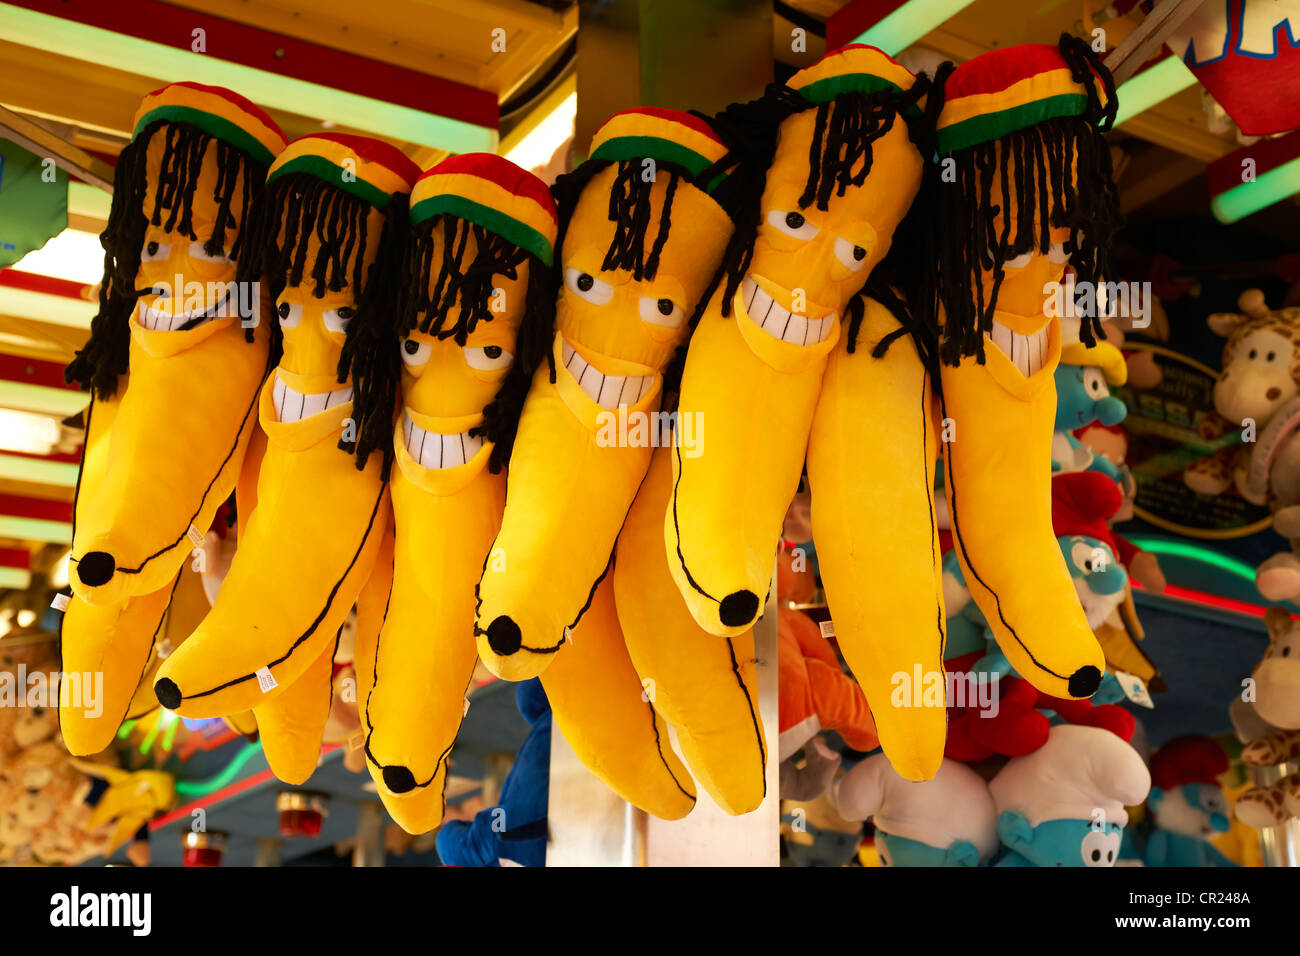 reggae banana stuffed animal